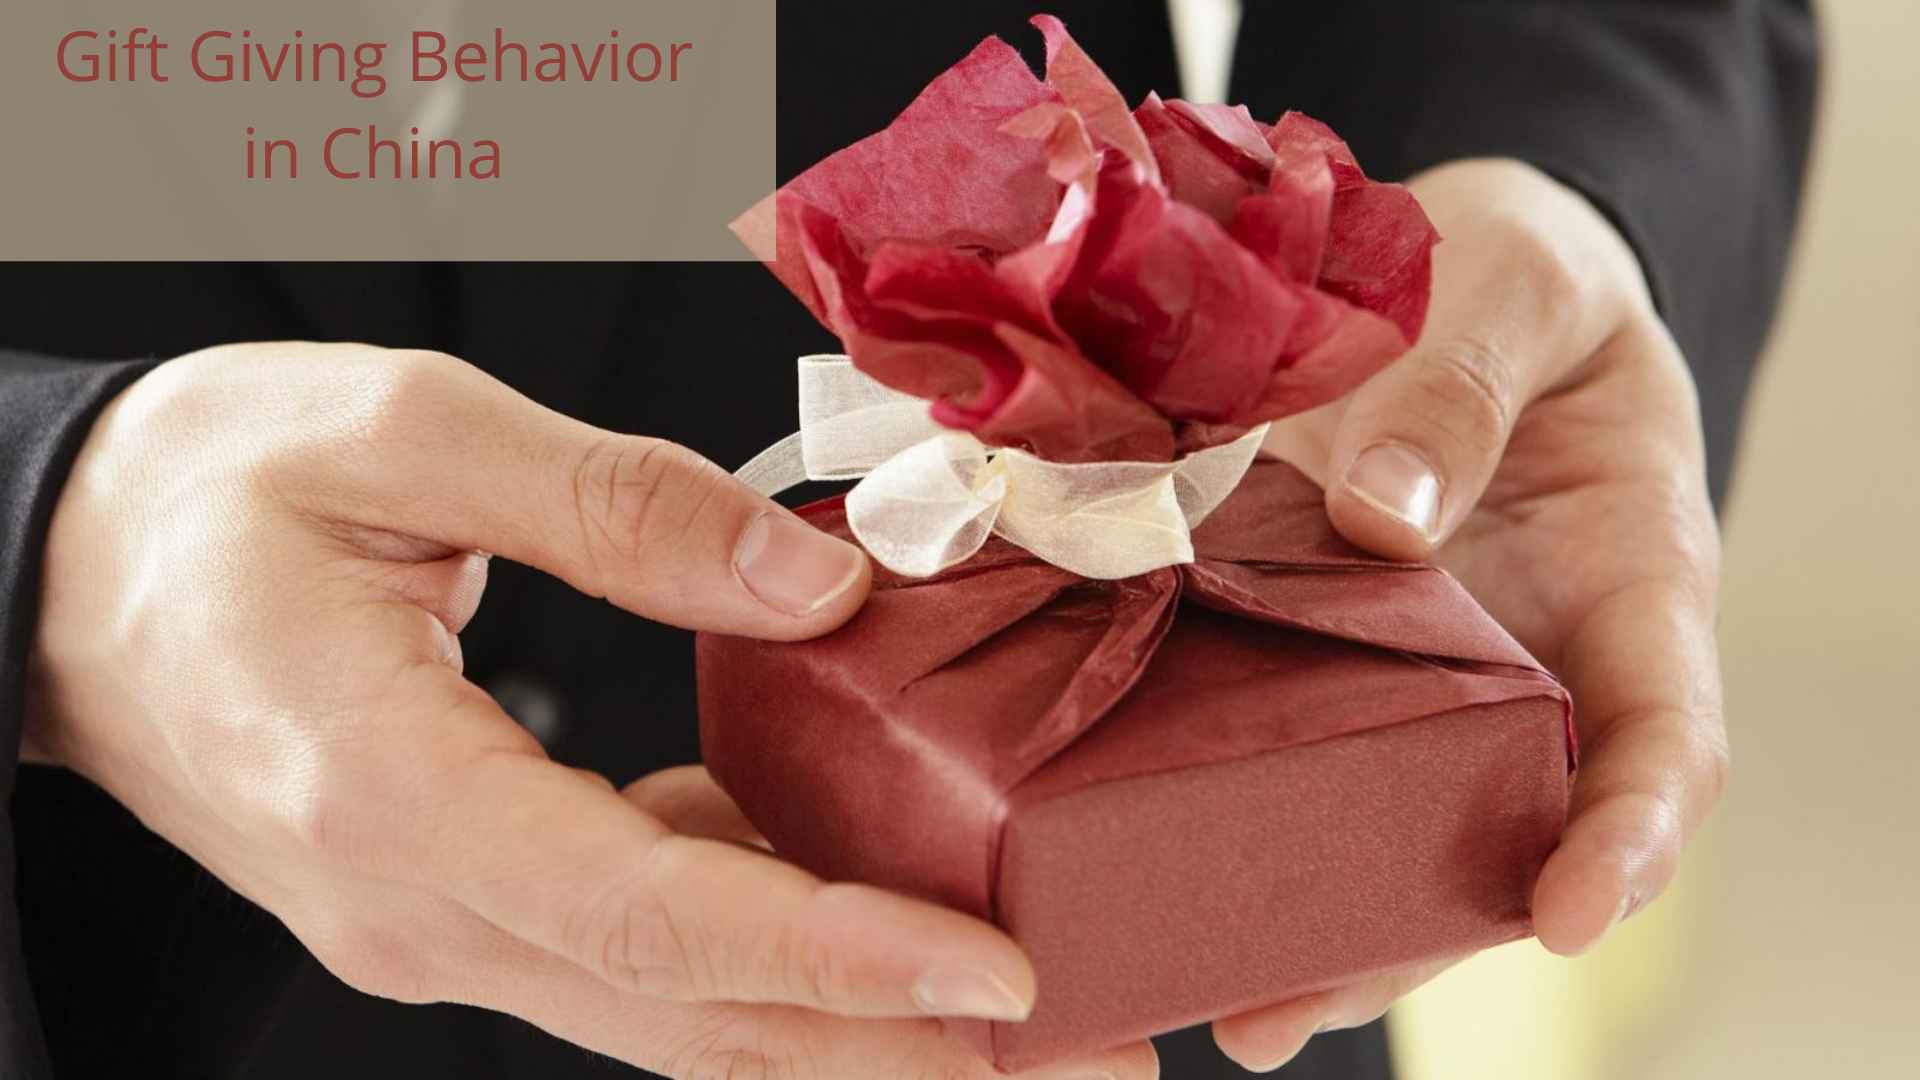 Gift giving behavior in China 